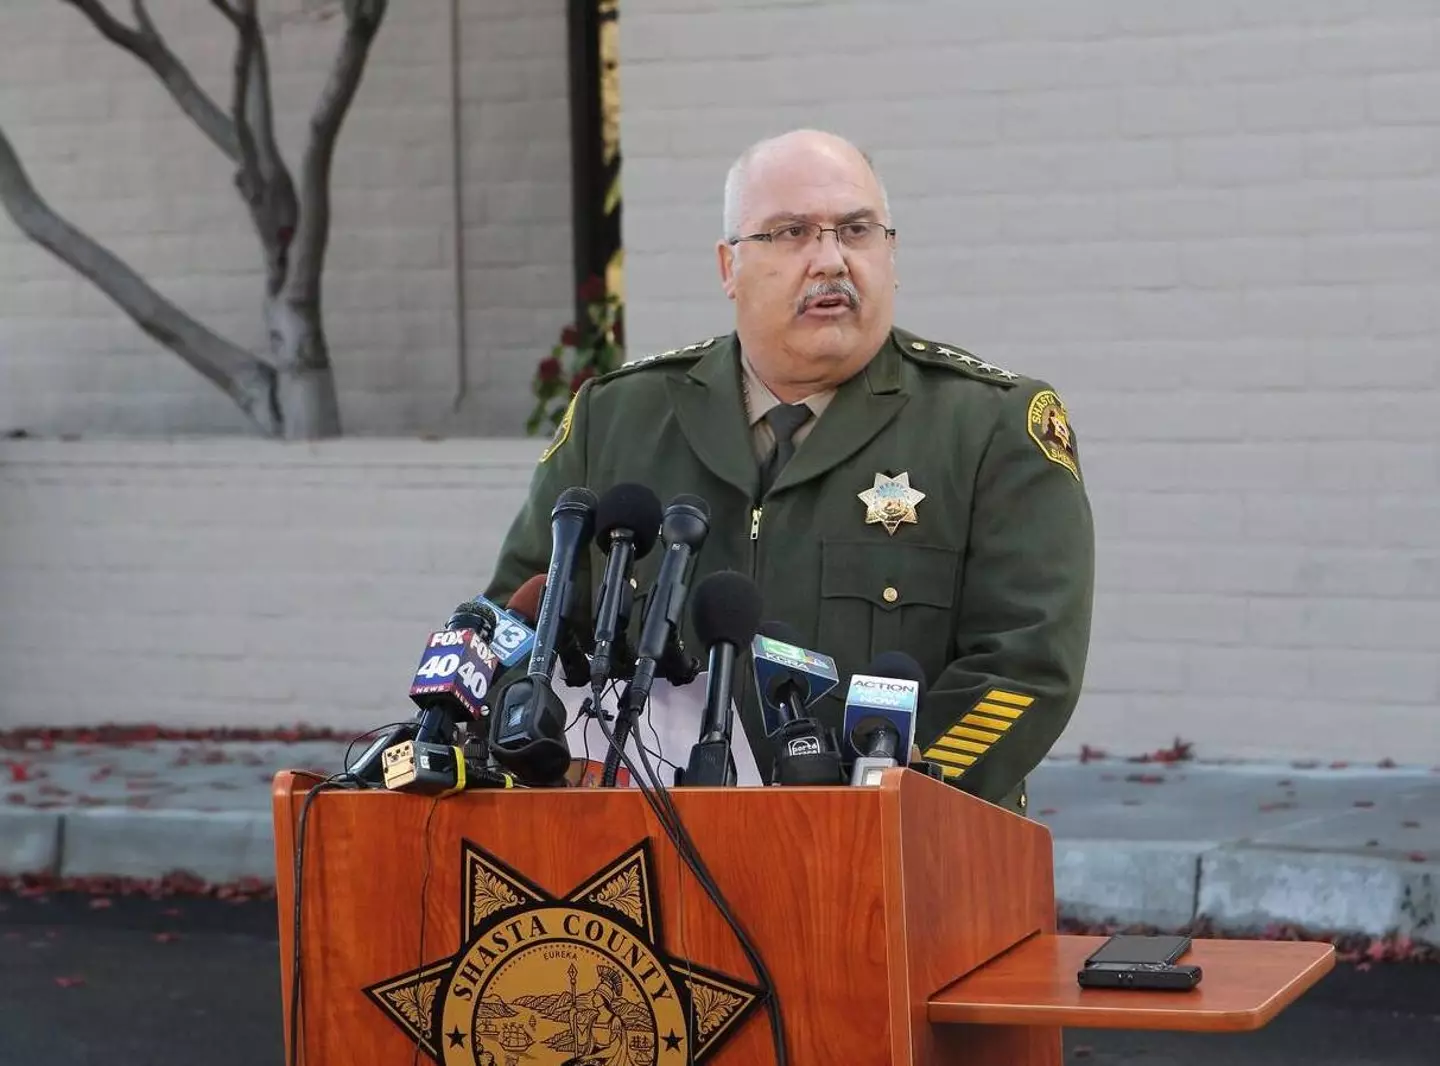 Sheriff Tom Bosenko of Shasta County held a press conference.